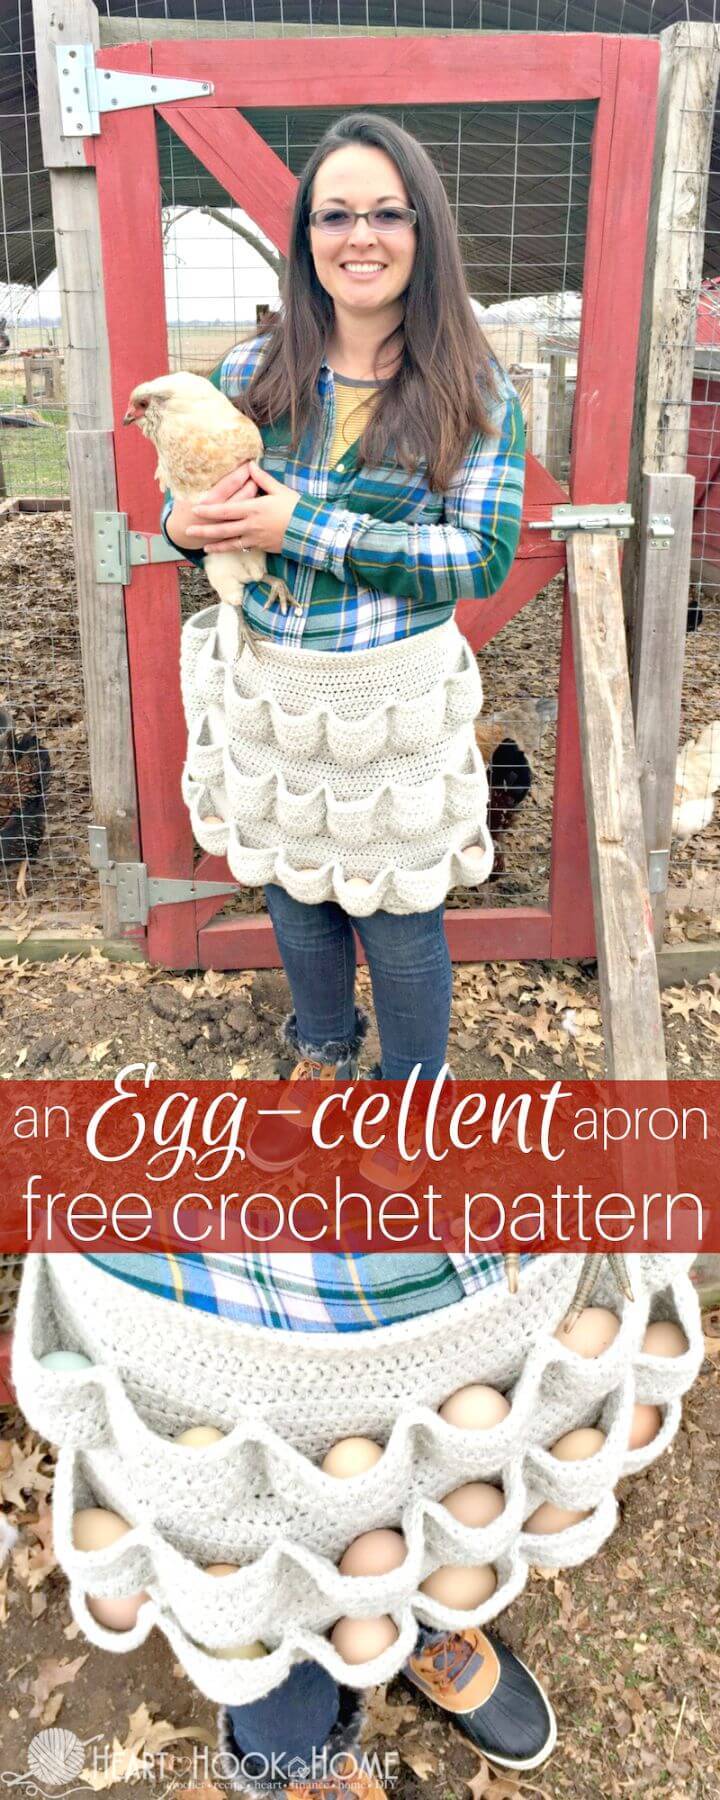 Free Crochet An Egg-Cellent Apron Pattern